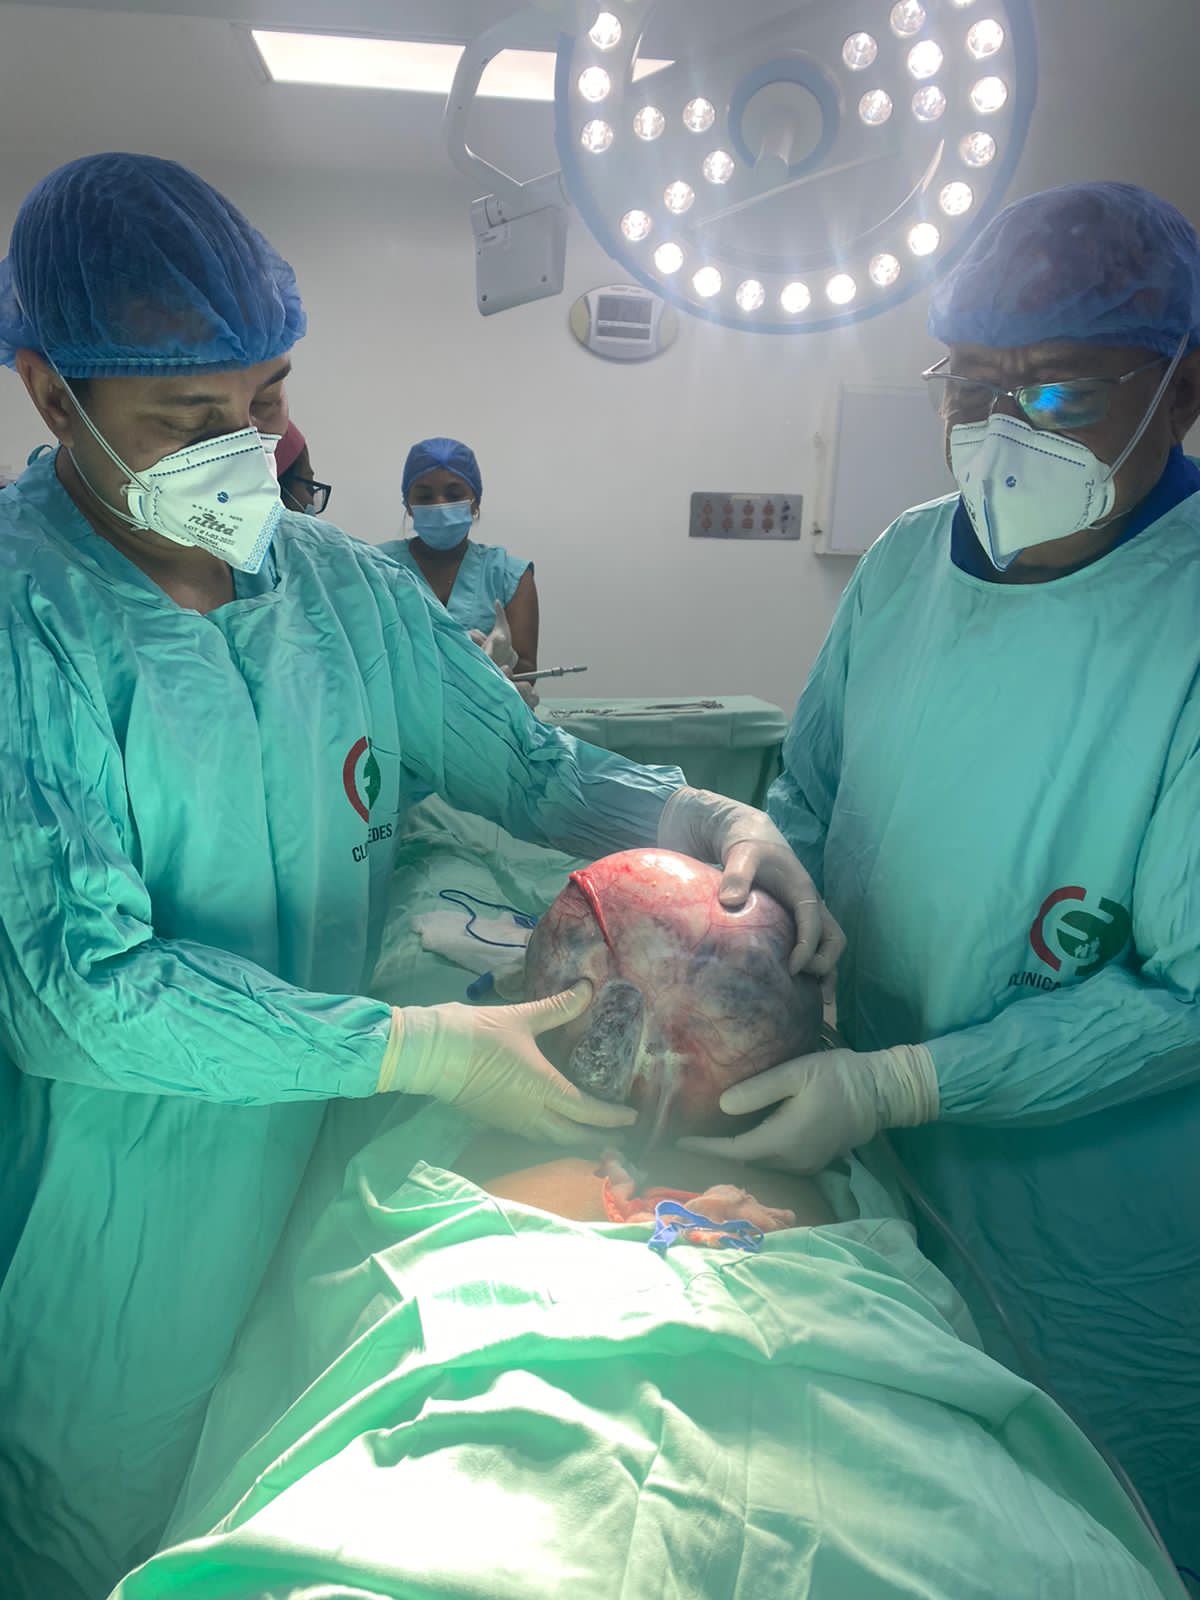 Le extraen un tumor de más seis kilos en clínica Cedes de Riohacha